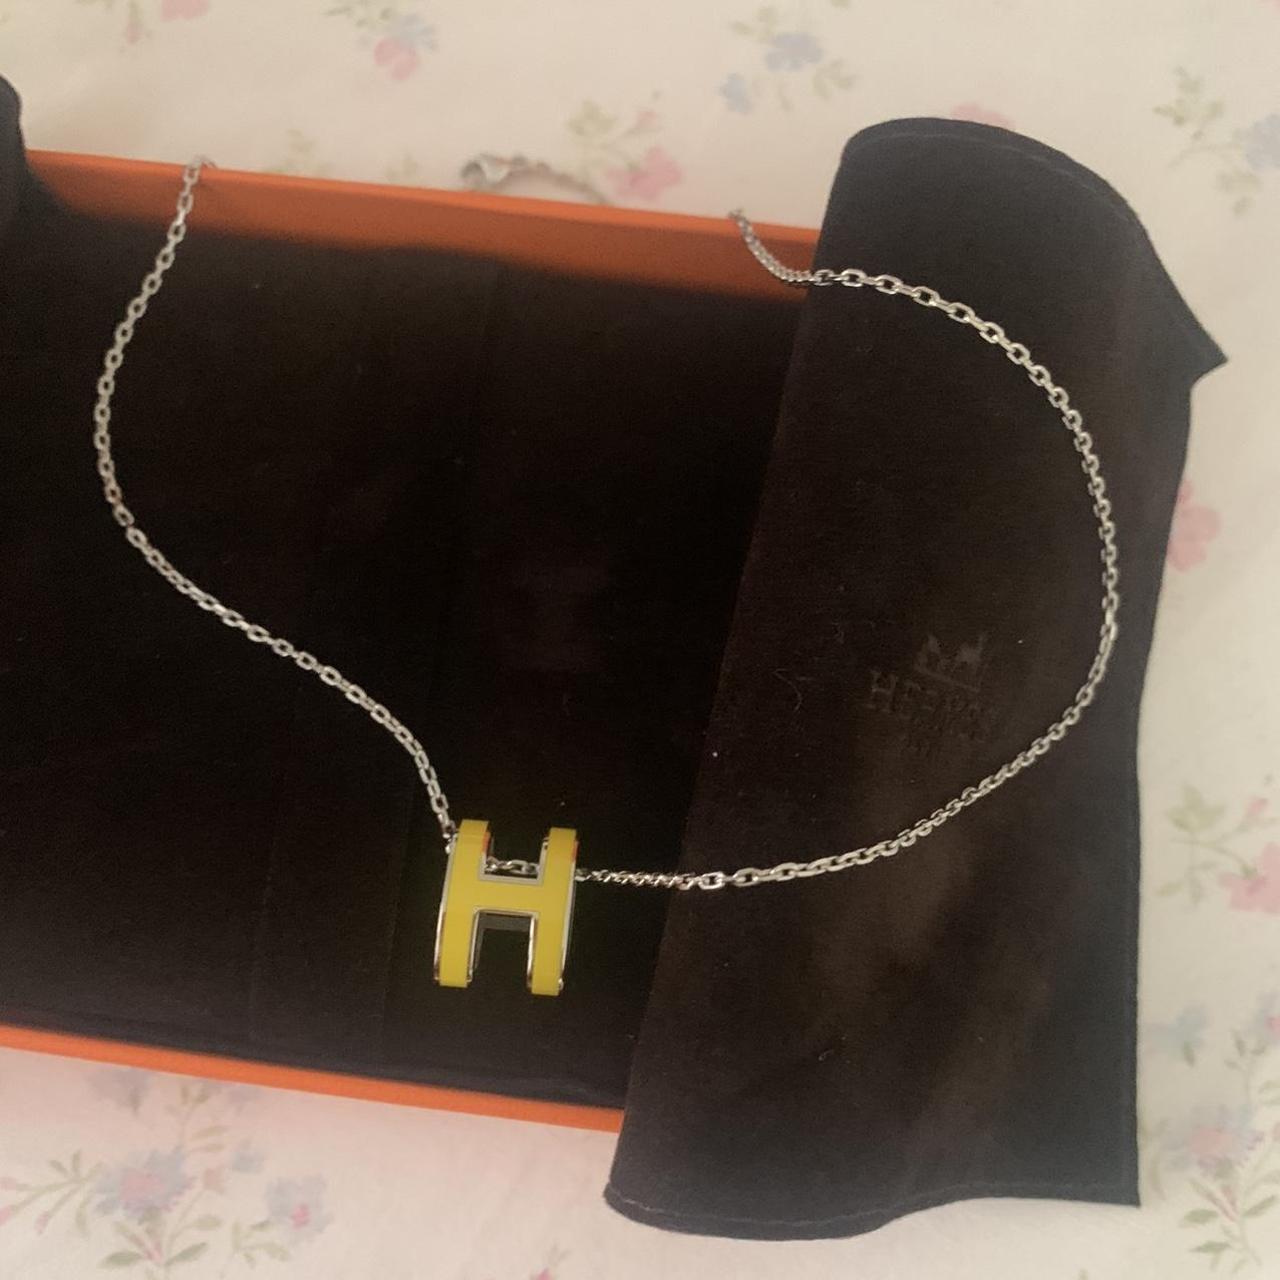 Hermes - Hermes classic Mini Pop H pendant necklace on Designer Wardrobe